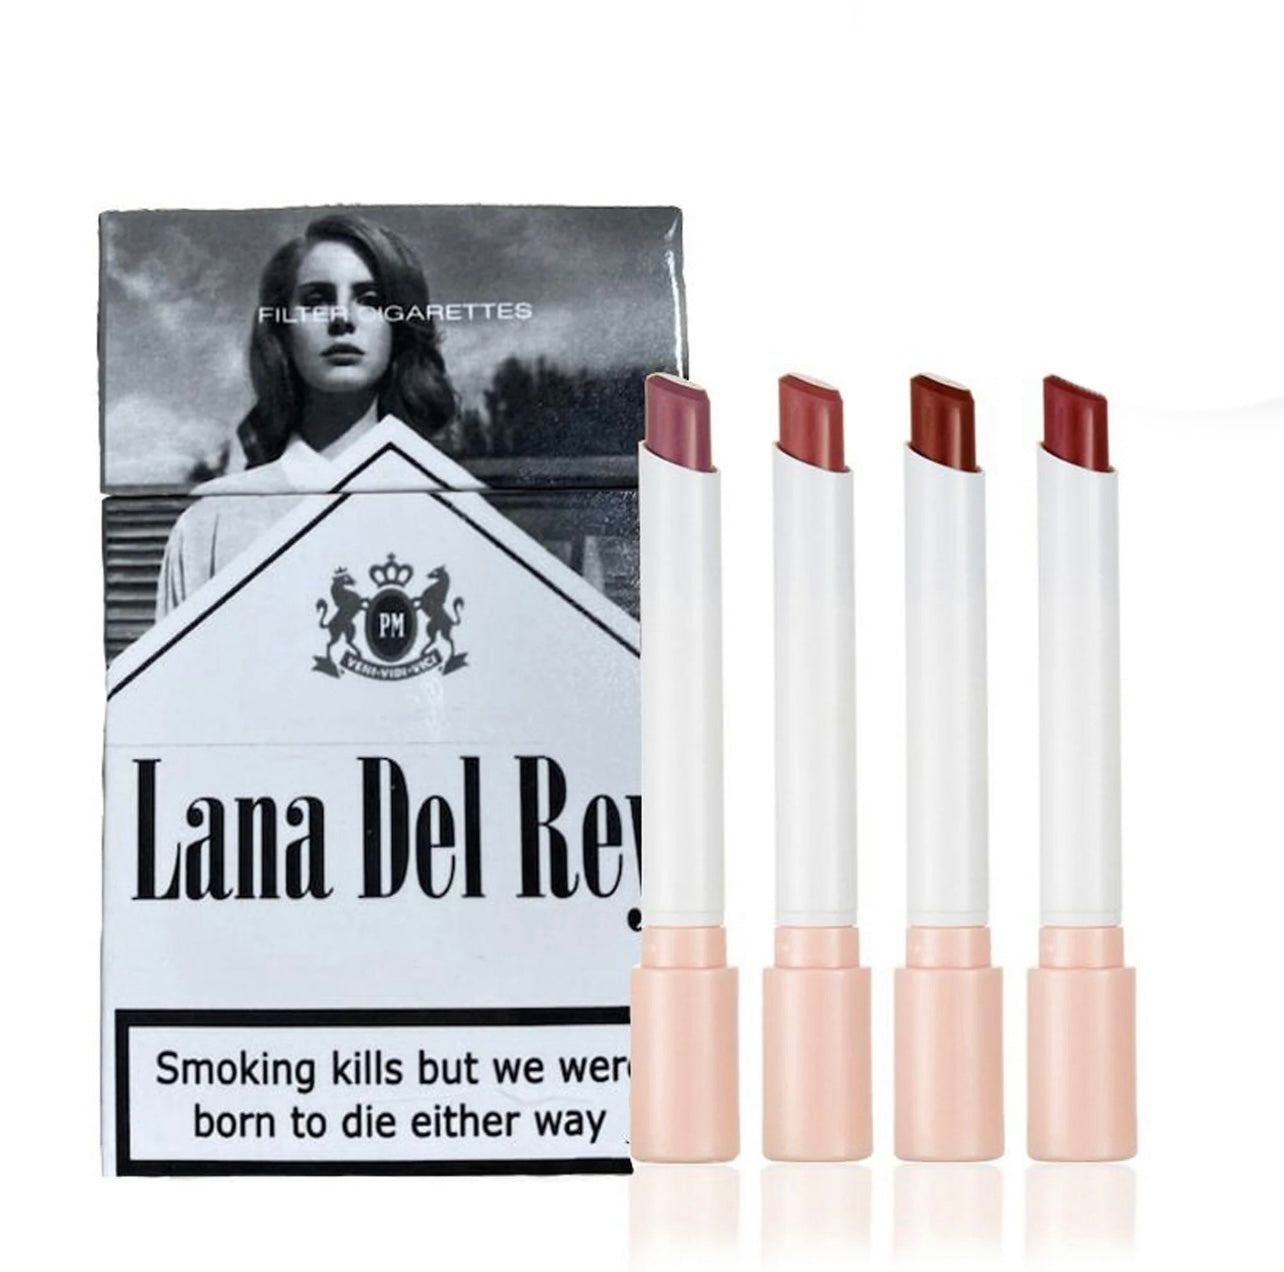 Lana Del Rey Lipstick, Handmade Lana Del Rey Lipstick Box, Lana Del Rey Poster Box, Lana Del Rey Cigarette Lipsticks Set, Lana Del Rey Gift, Lana del rey merch 2023, LDR merch